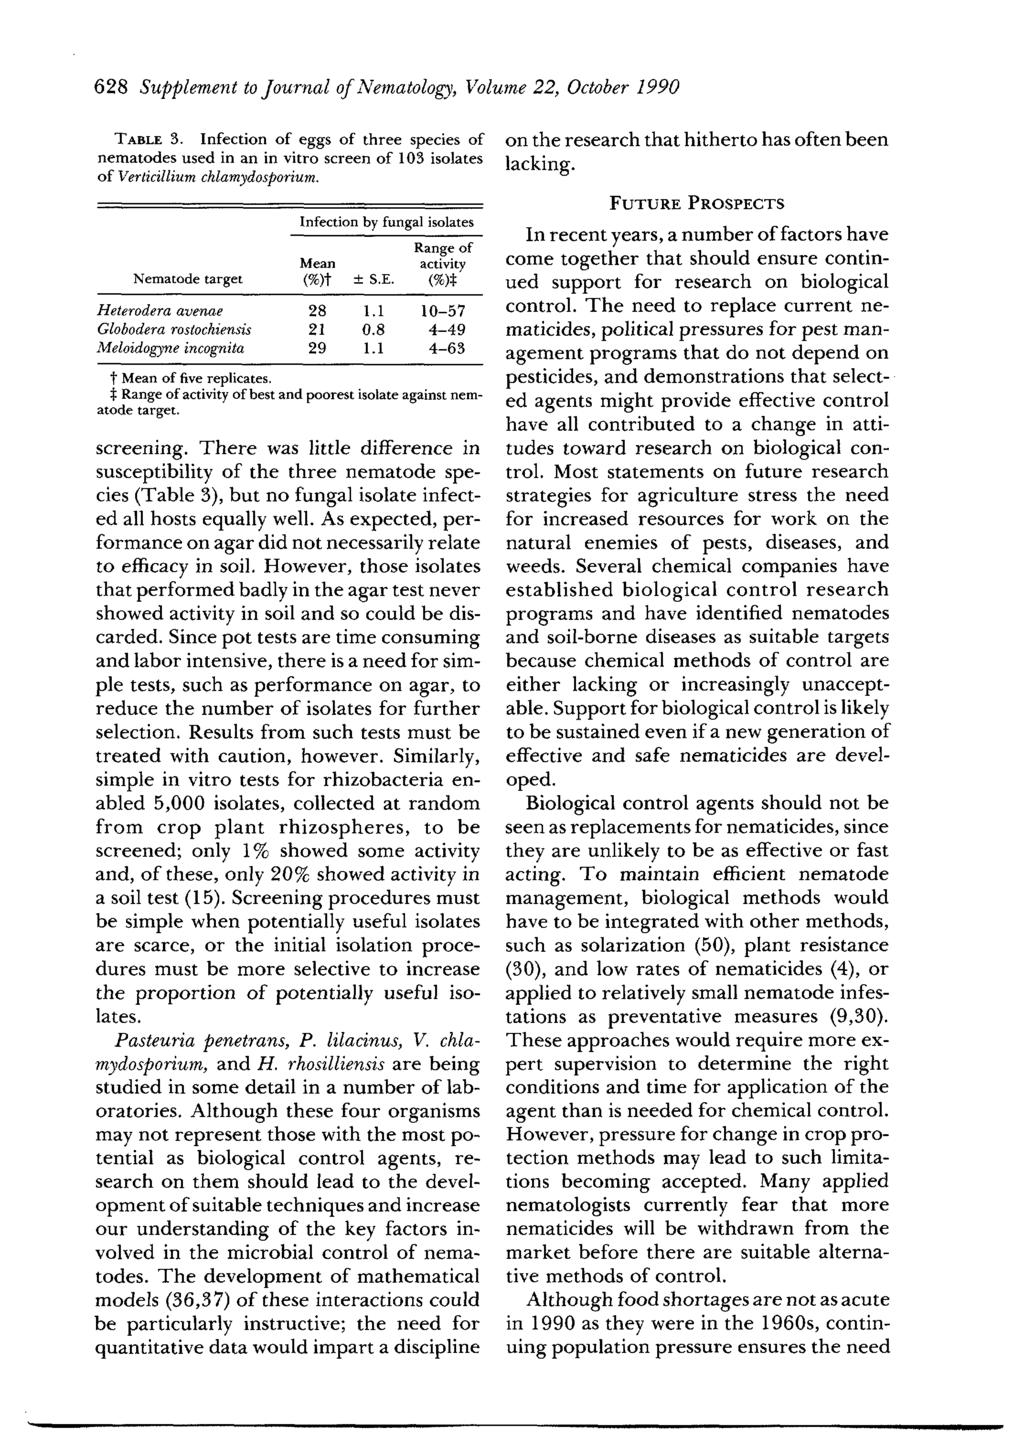 628 Supplement to Journal of Nematolo~y, Volume 22, October 1990 TABLE 3. Infection of eggs of three species of nematodes used in an in vitro screen of 103 isolates of Verticillium chlamydosporium.